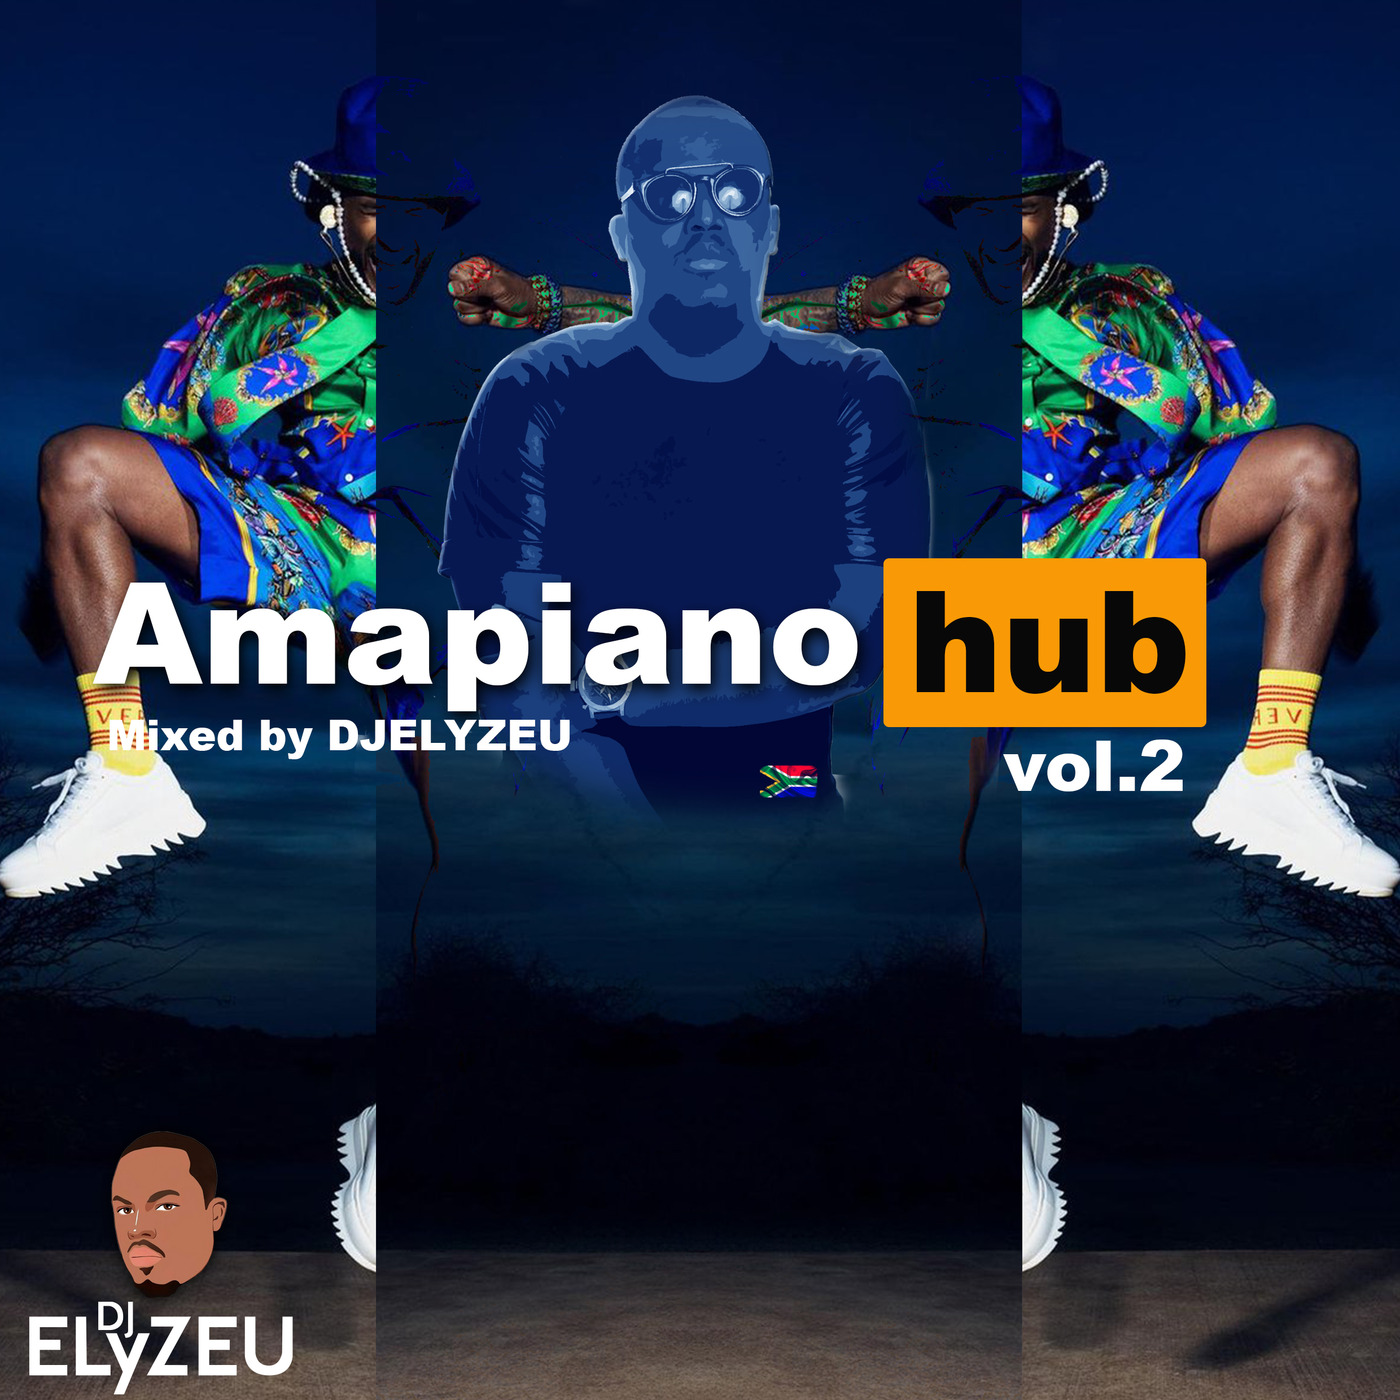 Amapiano hub VOL.2 MIXED BY DJ ELYZEU